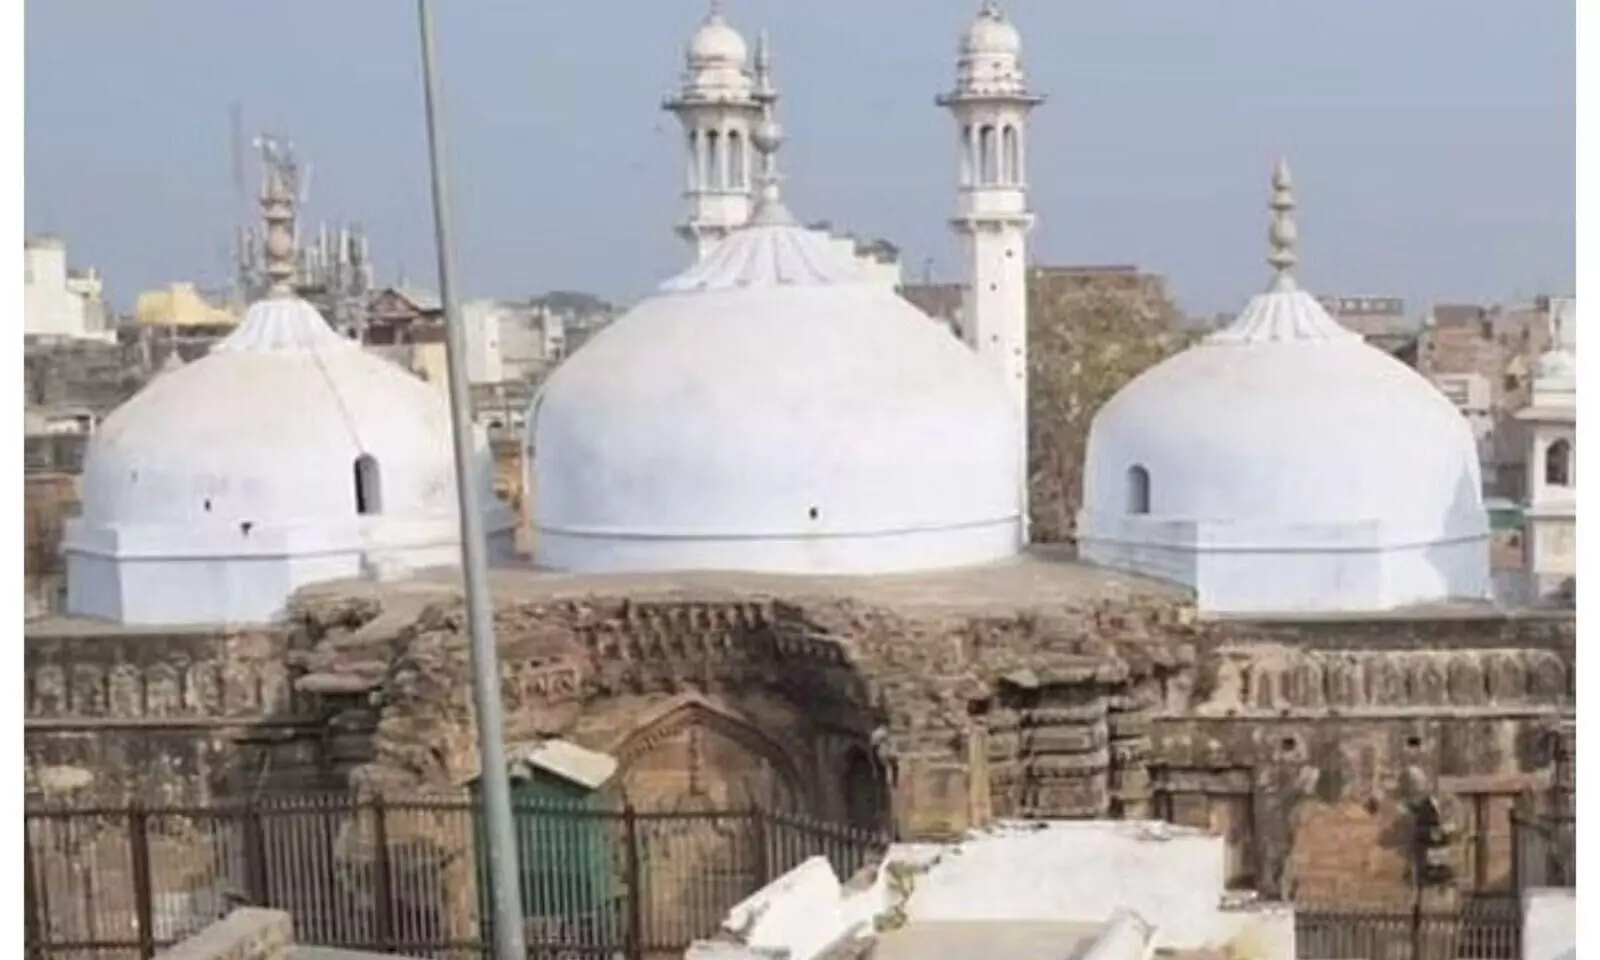 SC accepts determining religious character of Gyanvapi mosque, SC allows ASI non-invasive survey